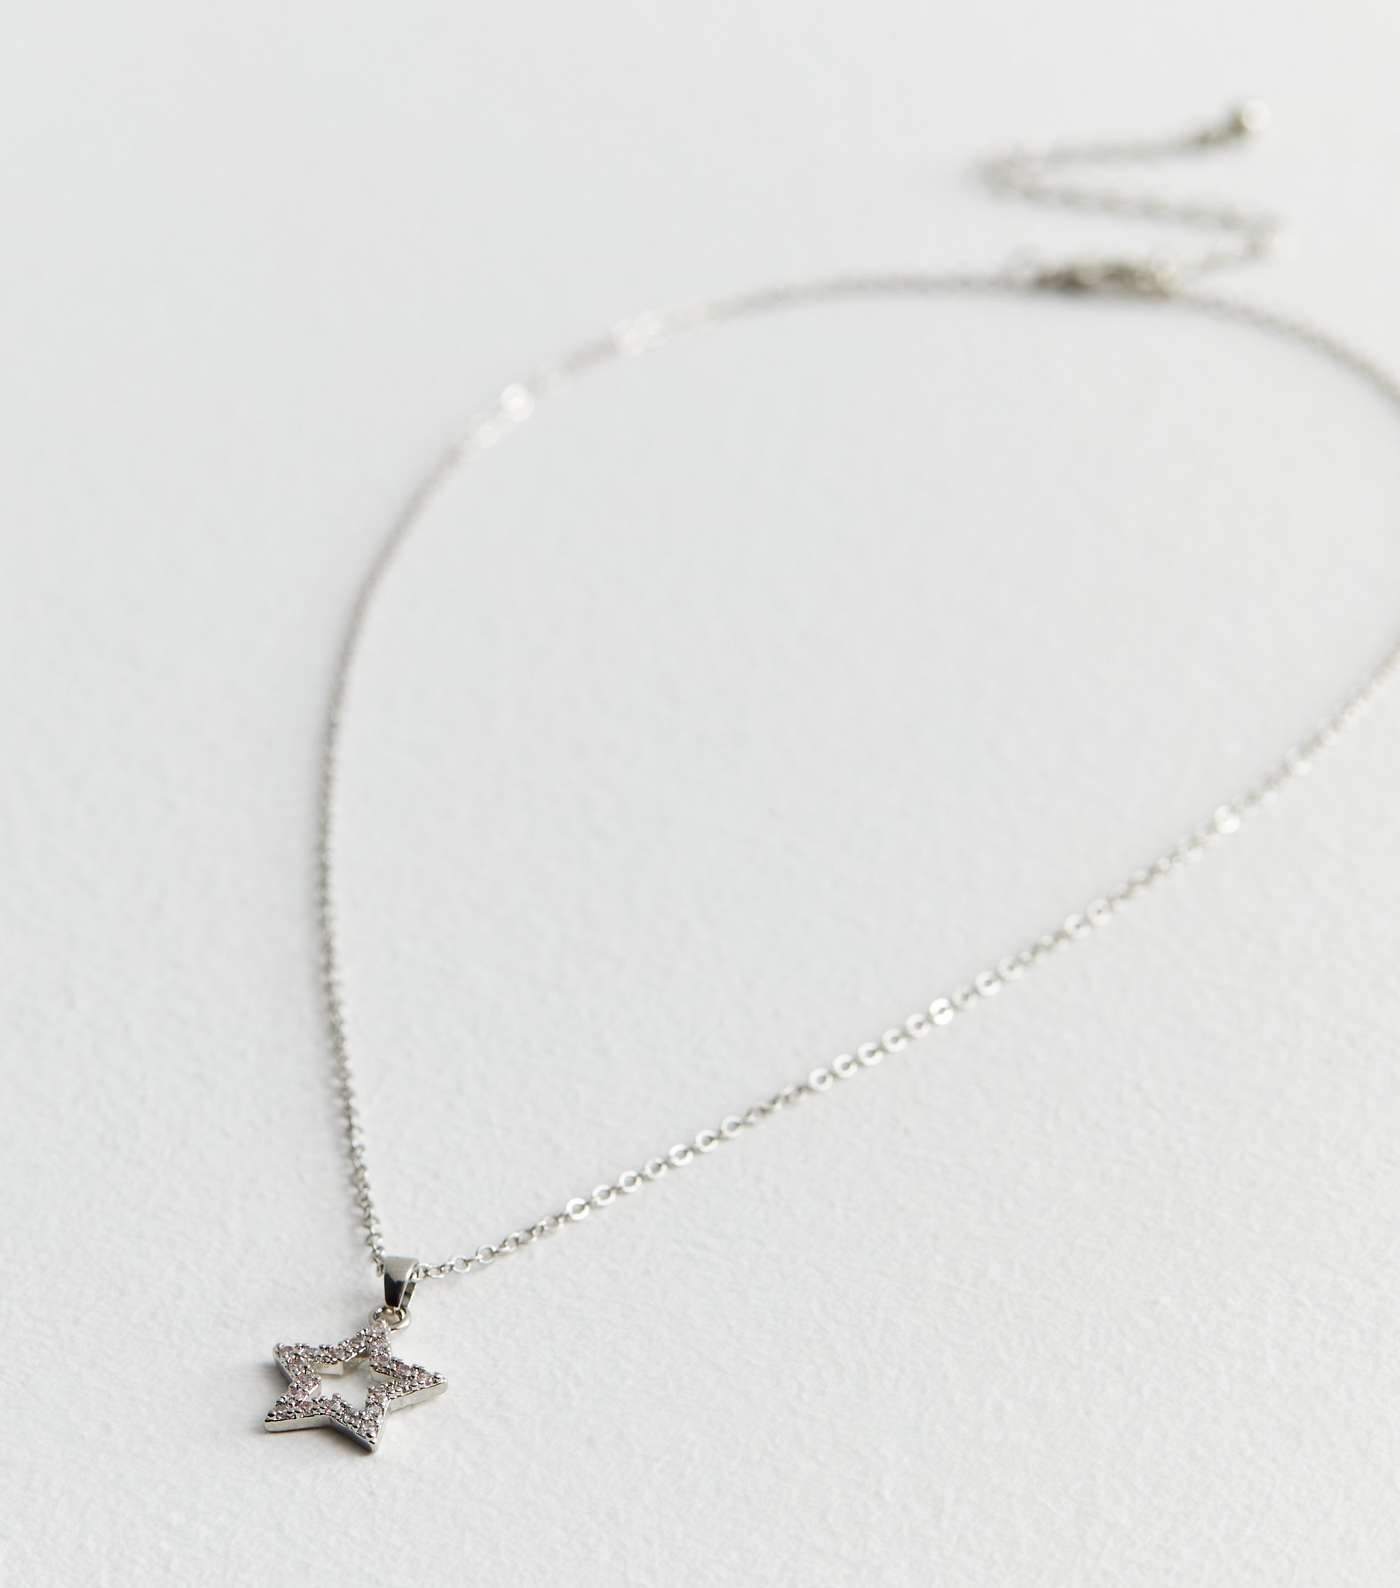 Silver Cubic Zirconia Star Pendant Necklace